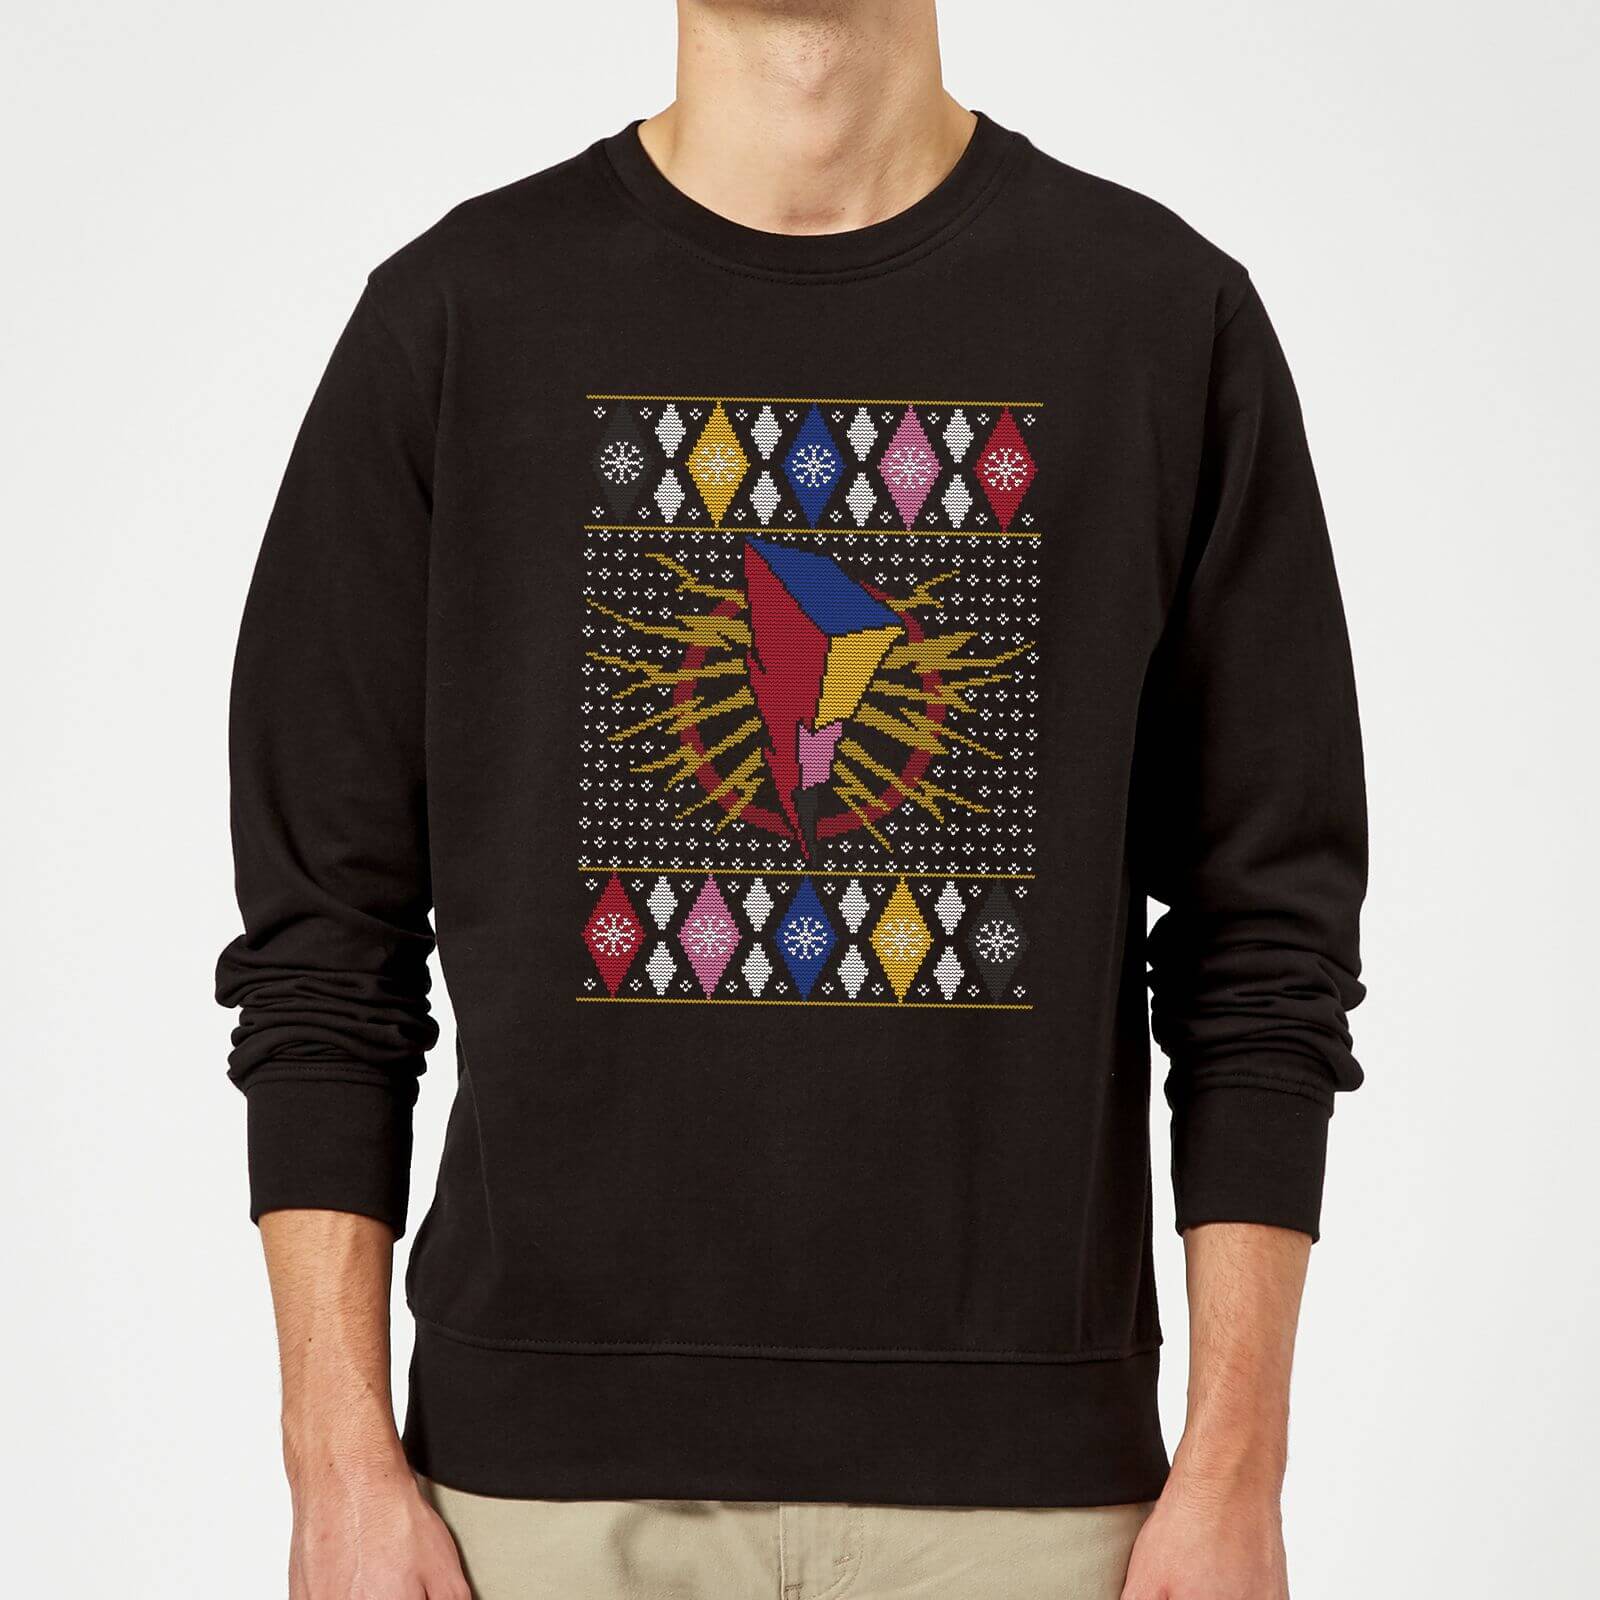 Power Rangers Christmas Sweatshirt - Black - S